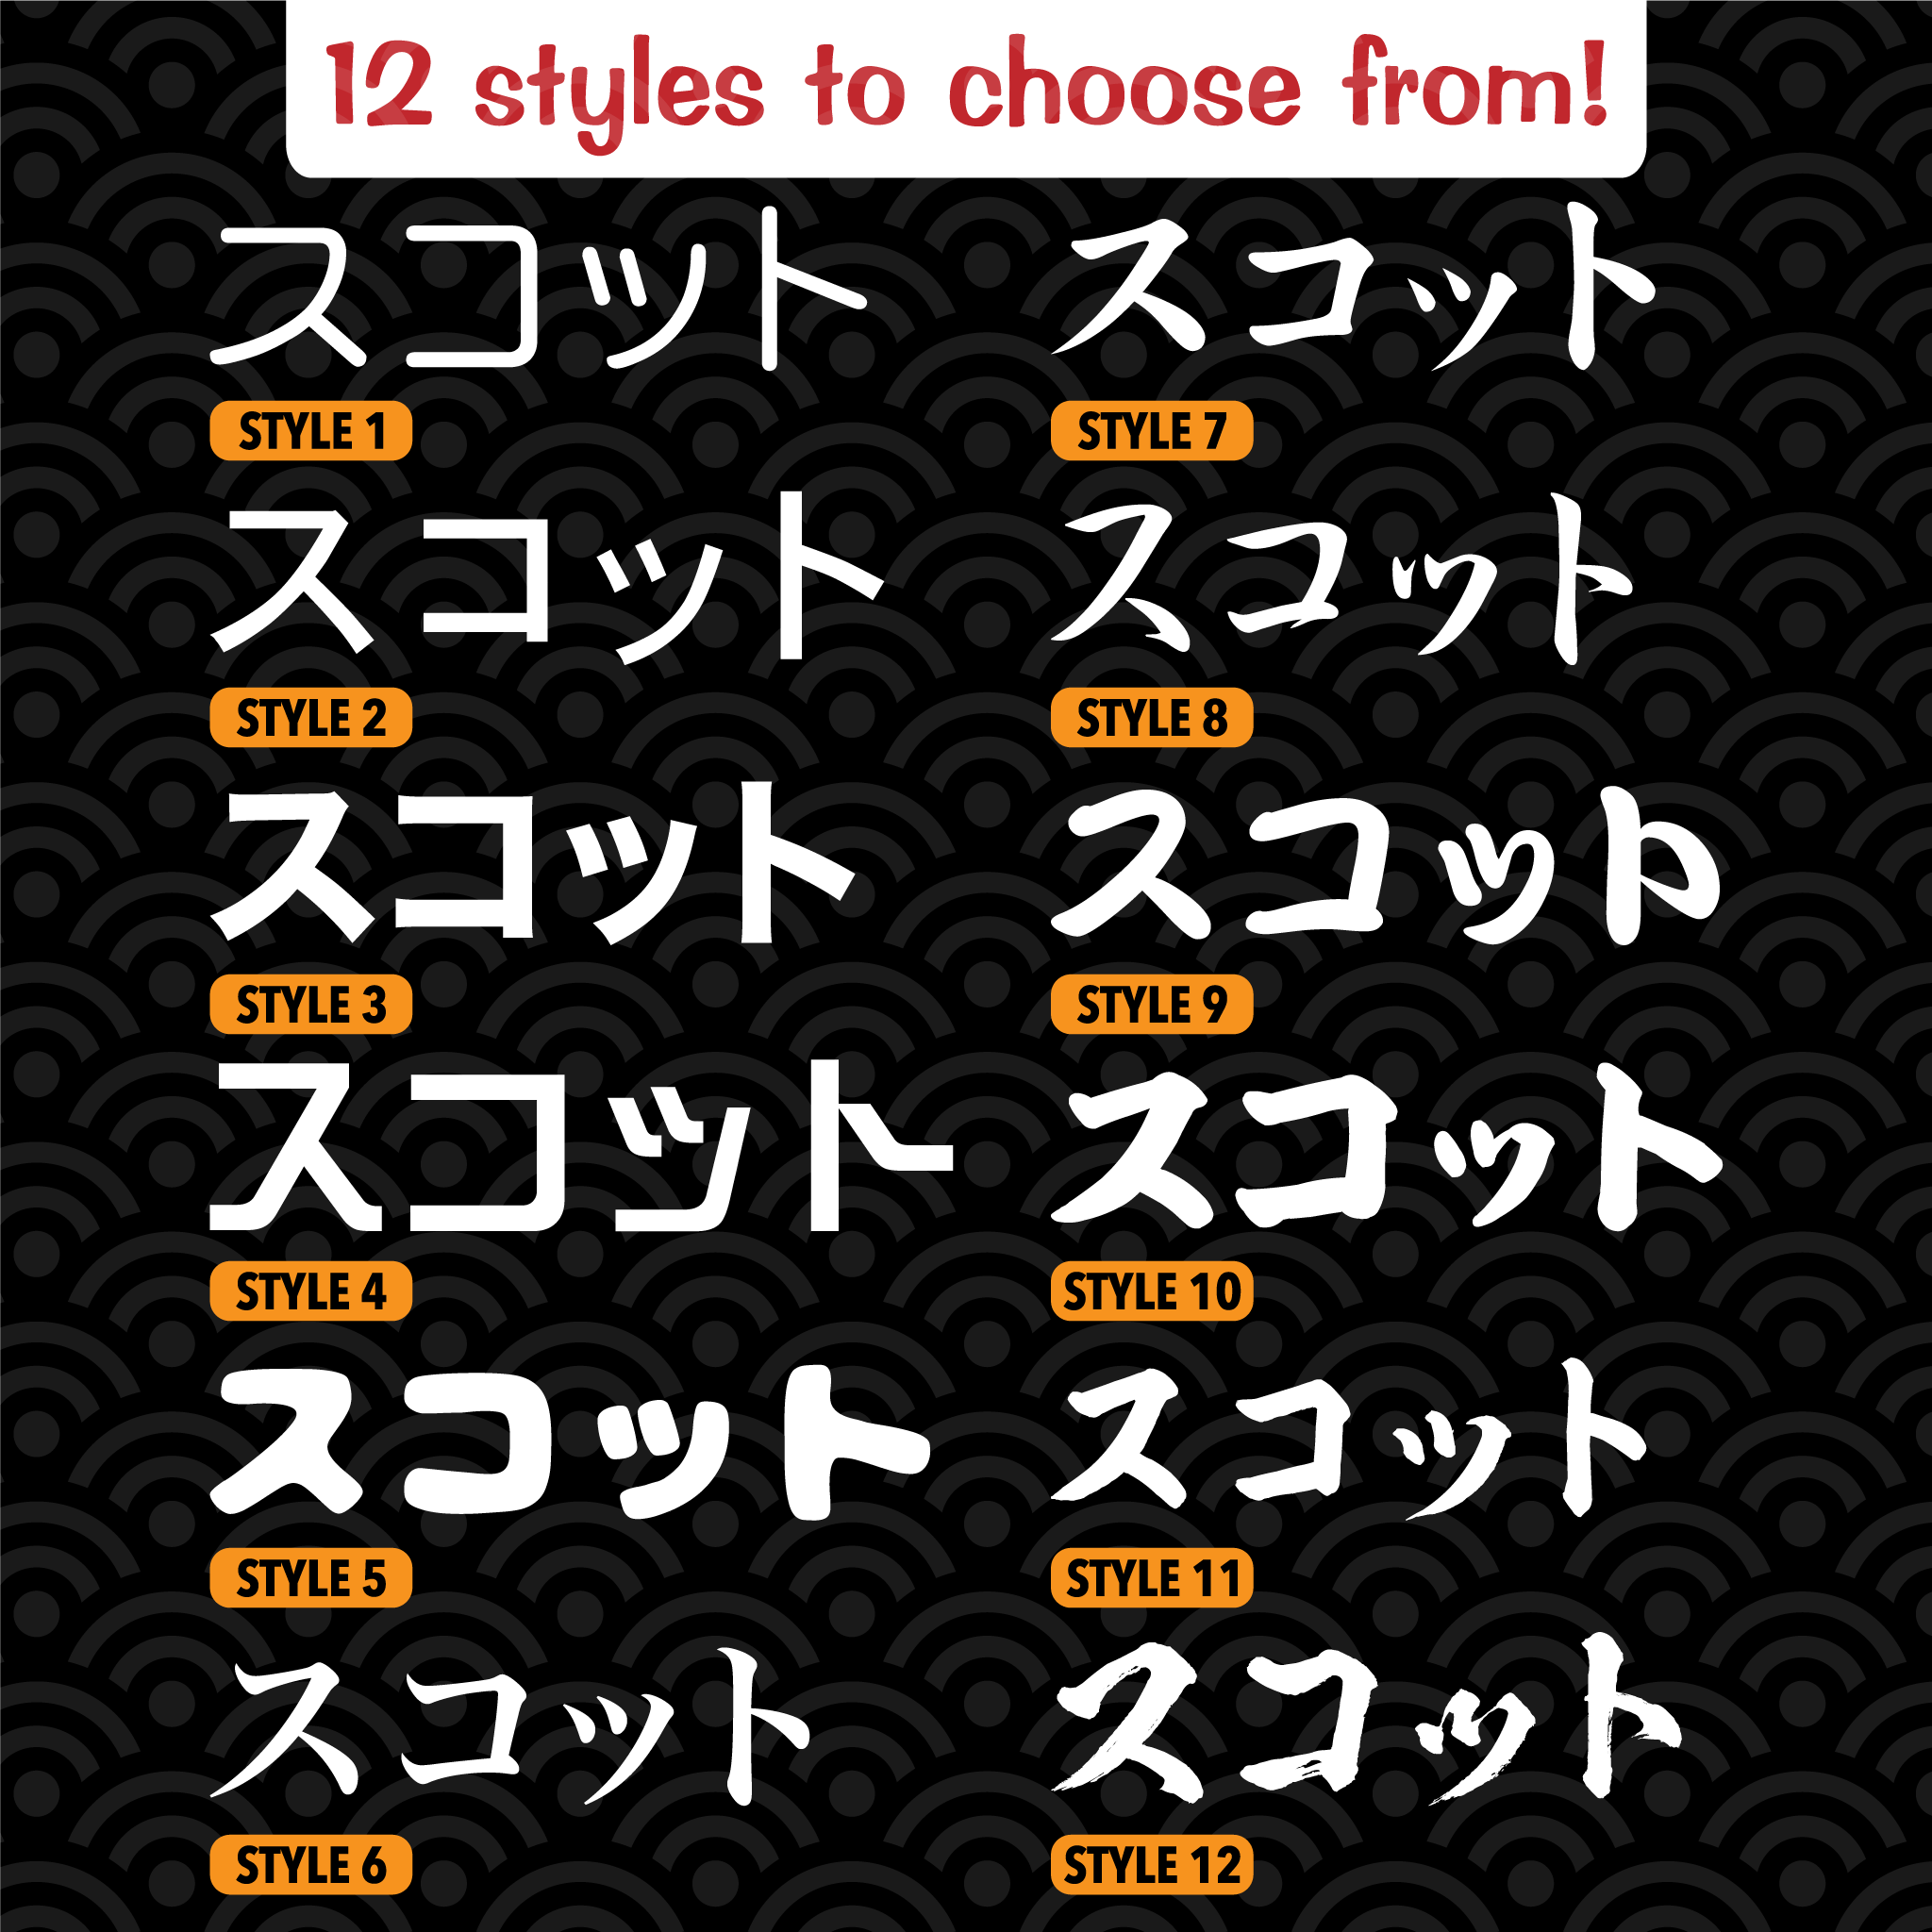 Custom Japanese Stickers